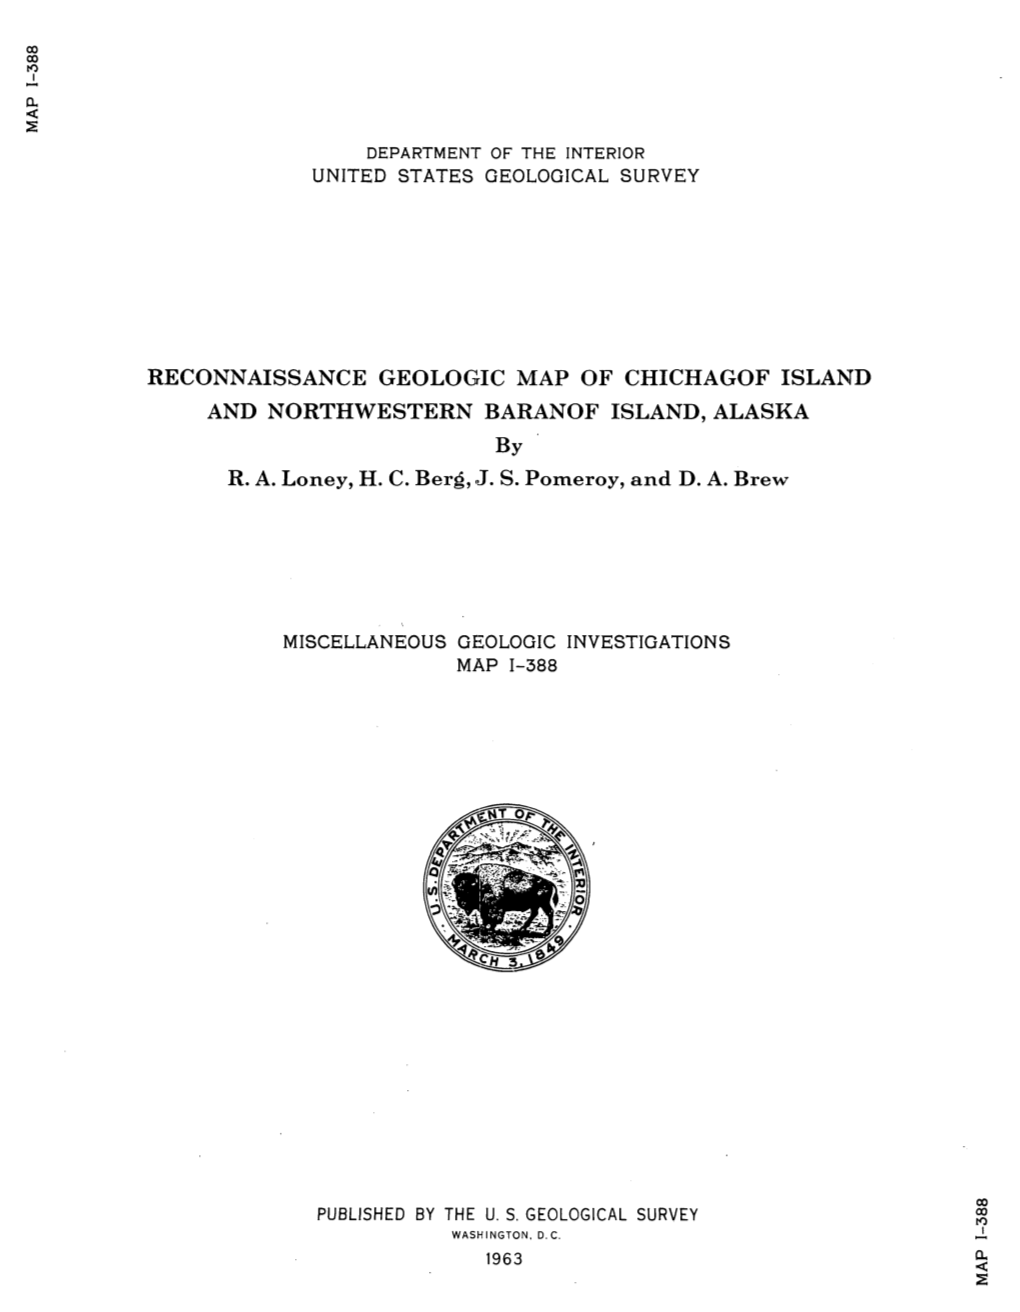 RECONNAISSANCE GEOLOGIC MAP of CHICHAGOF ISLAND and NORTHWESTERN BARANOF ISLAND, ALASKA by R